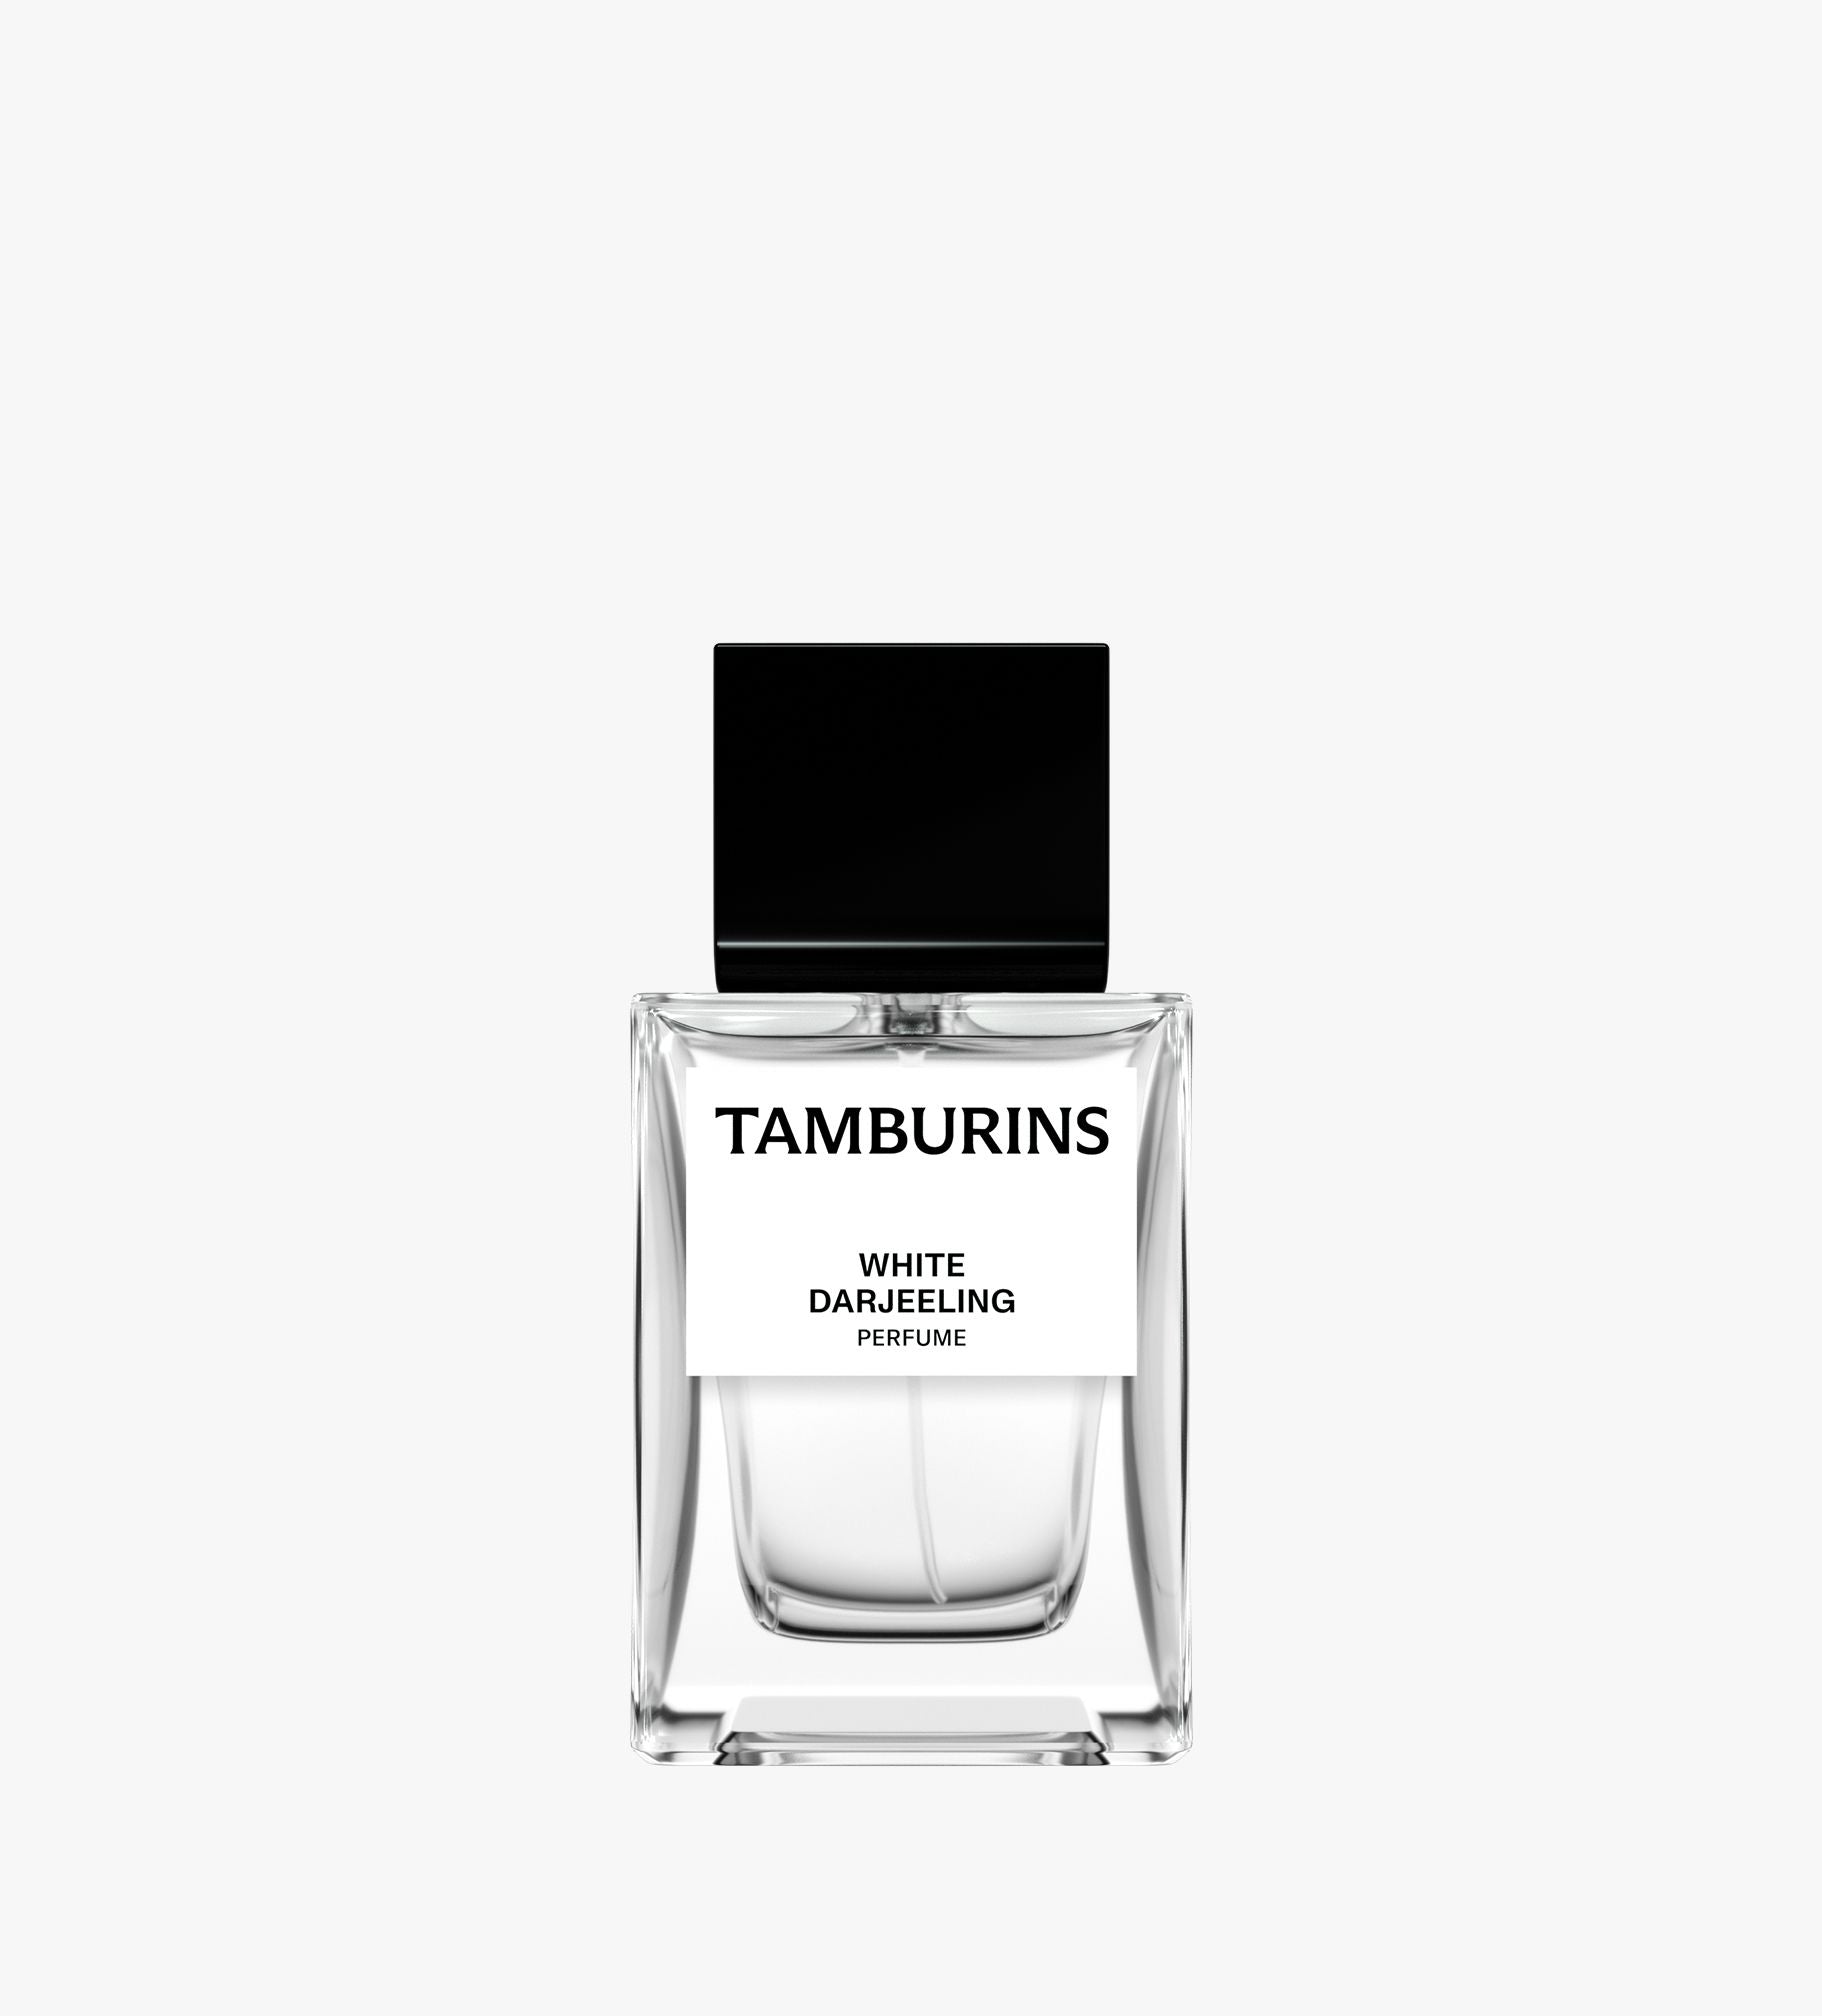 White TAMBURINS Perfume bottle containing Darjeeling fragrance, in 11ml or 50ml options.